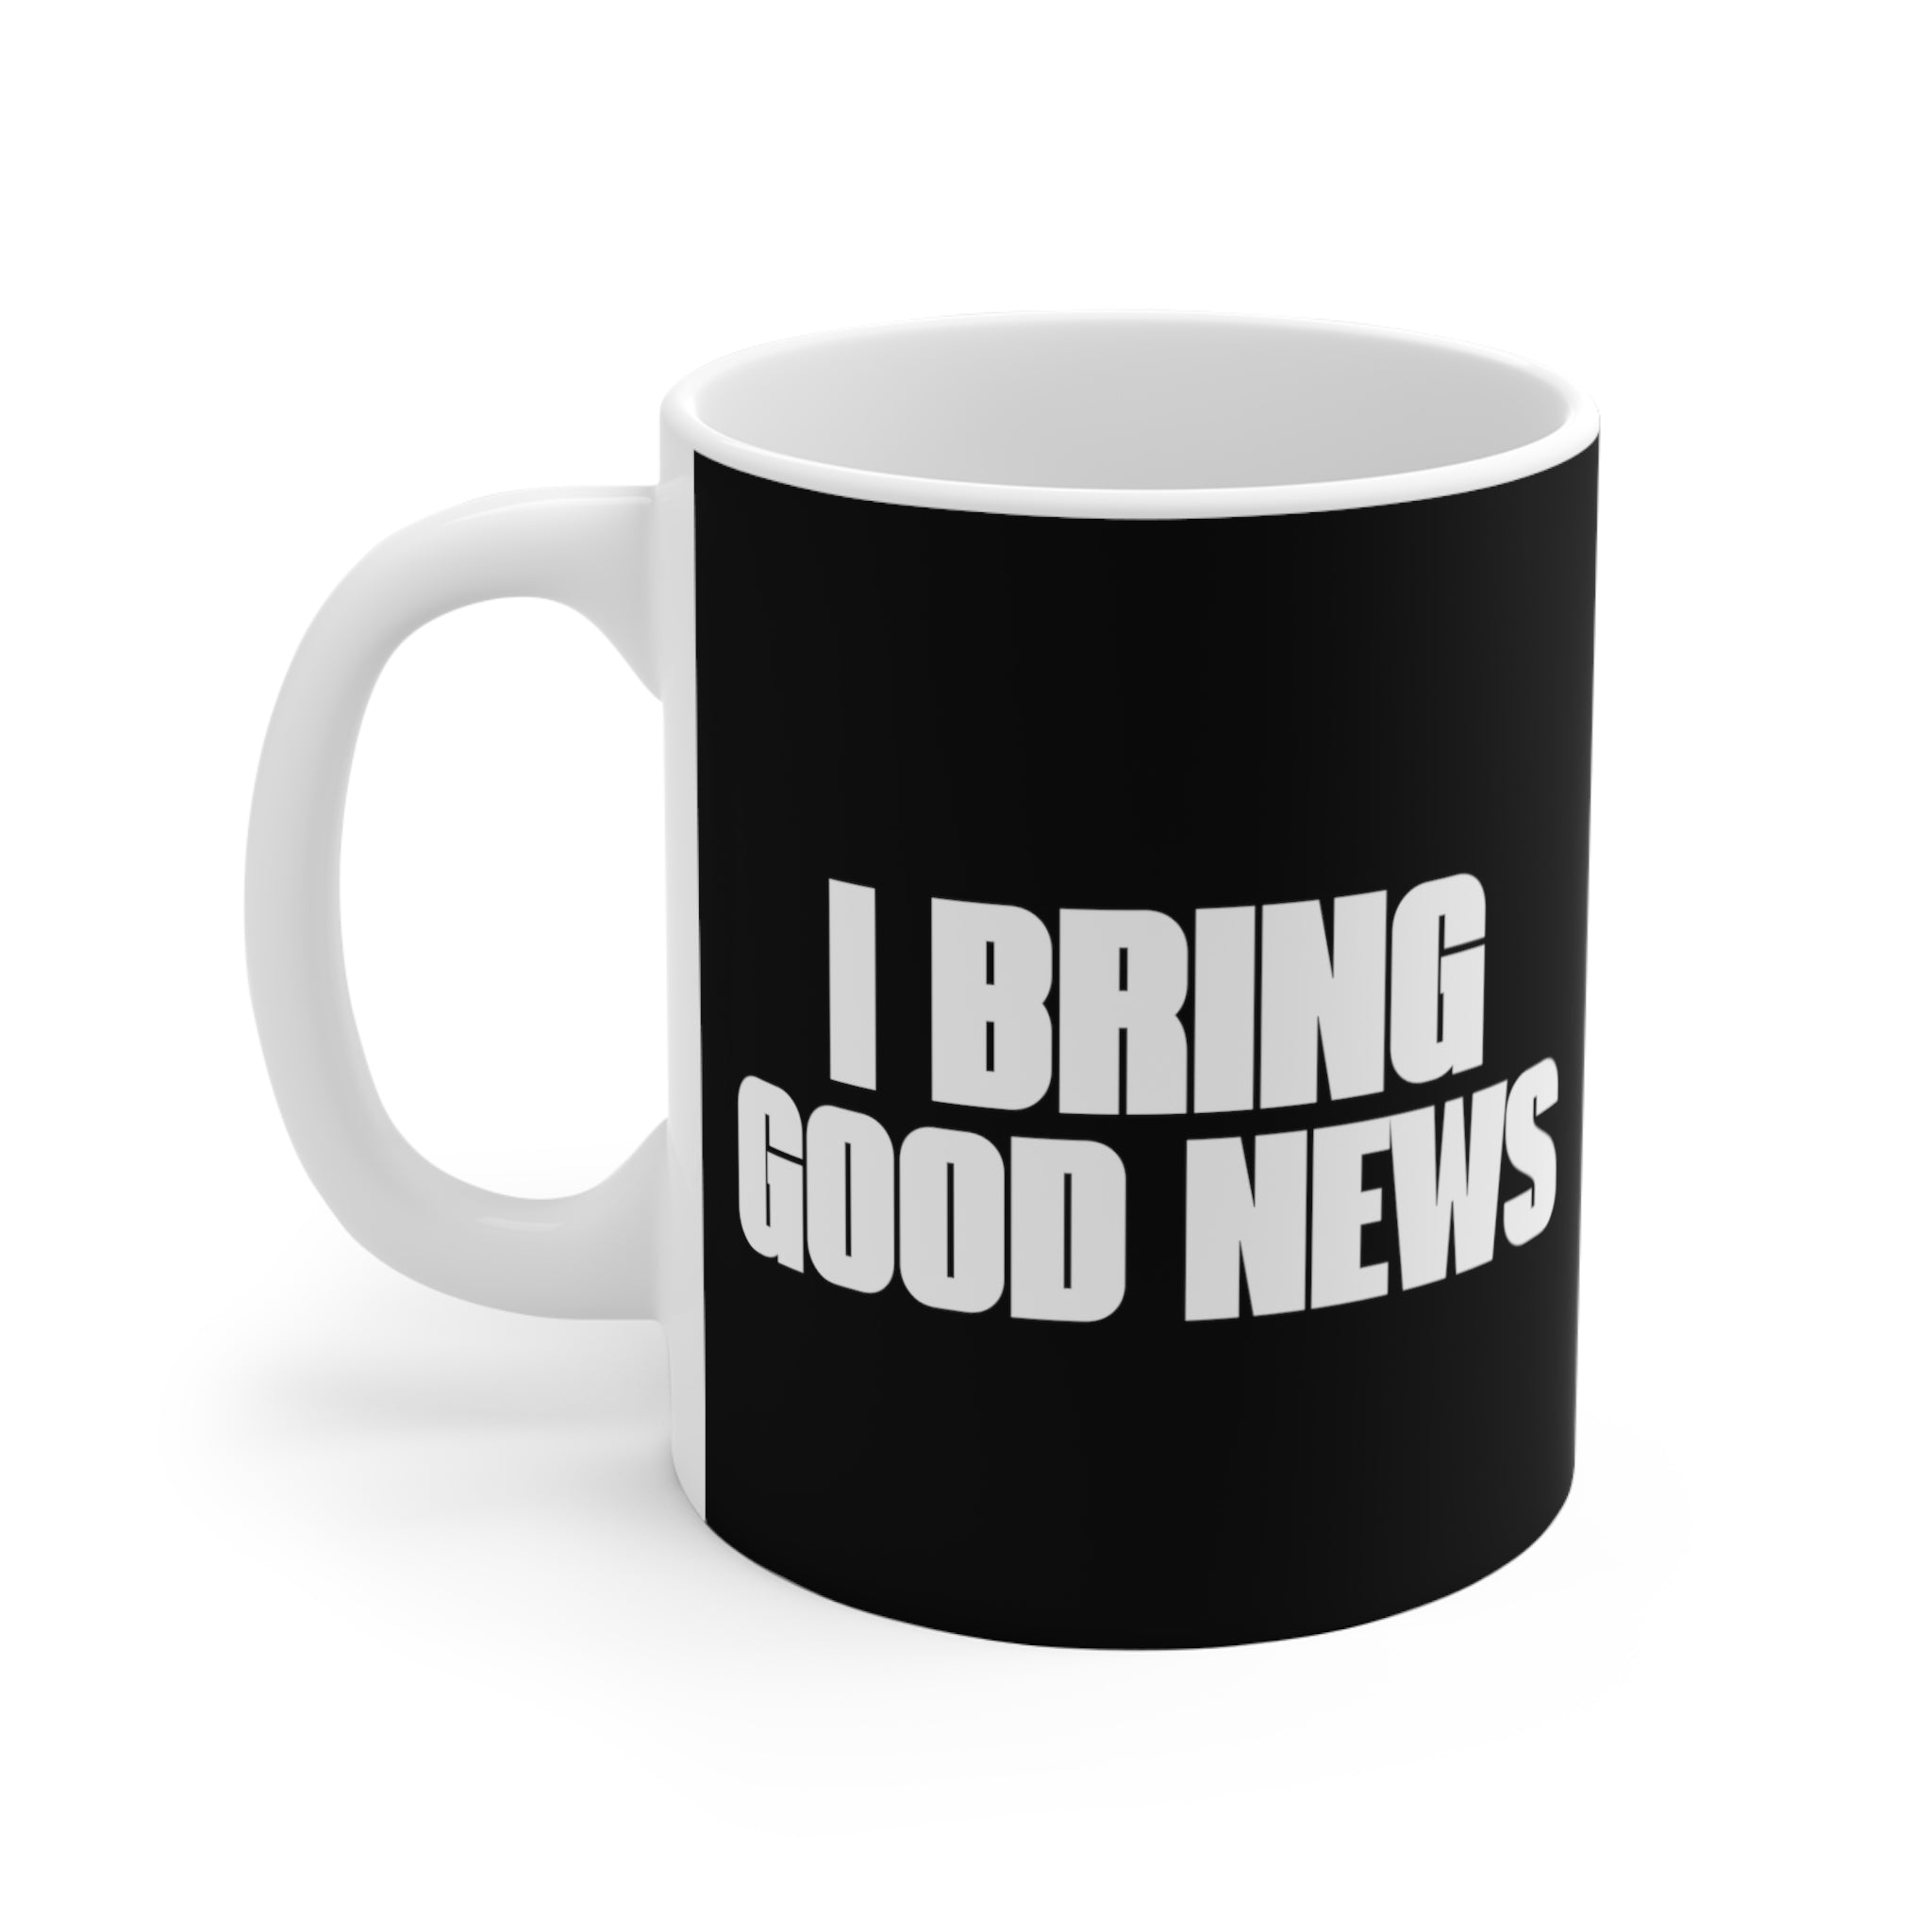 I Bring Good News Ceramic Coffee Cup